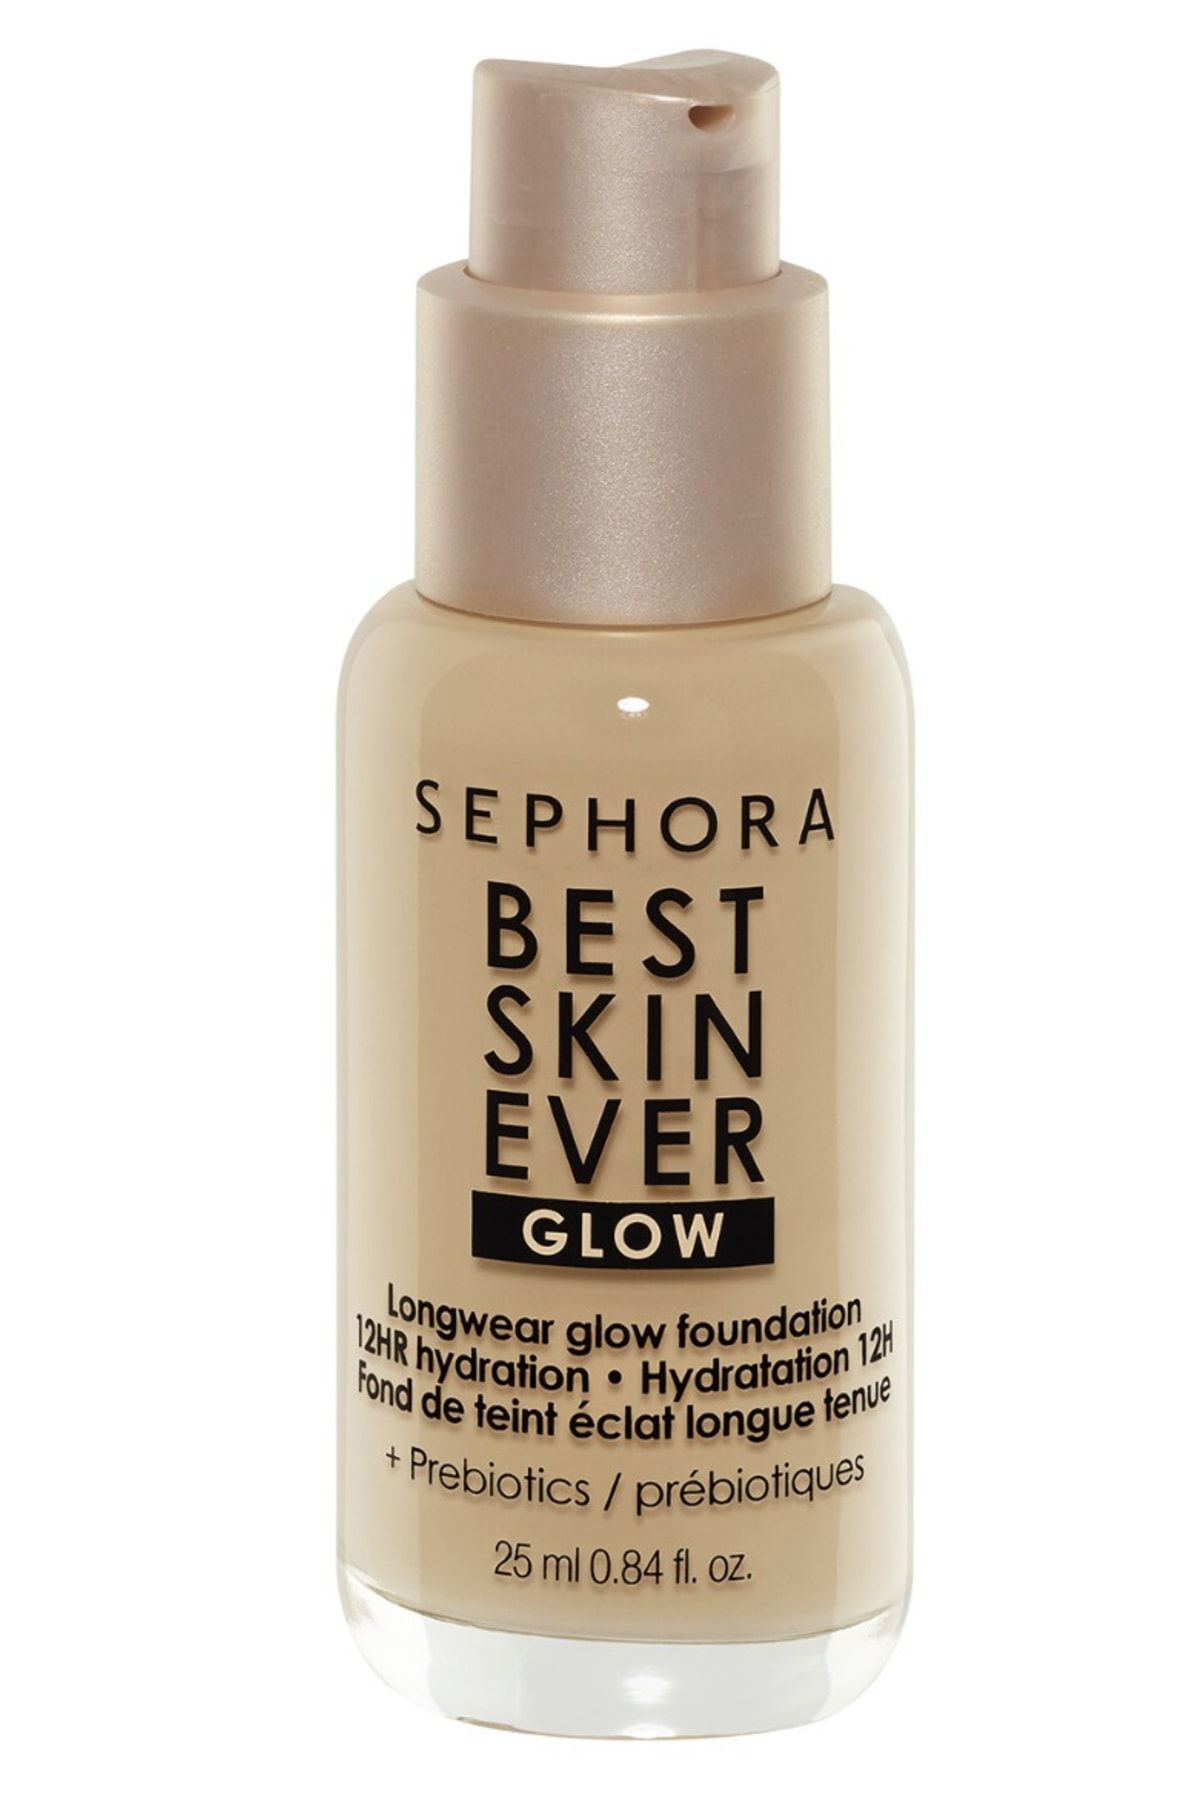 Sephora Best Skin Ever Glow Foundation